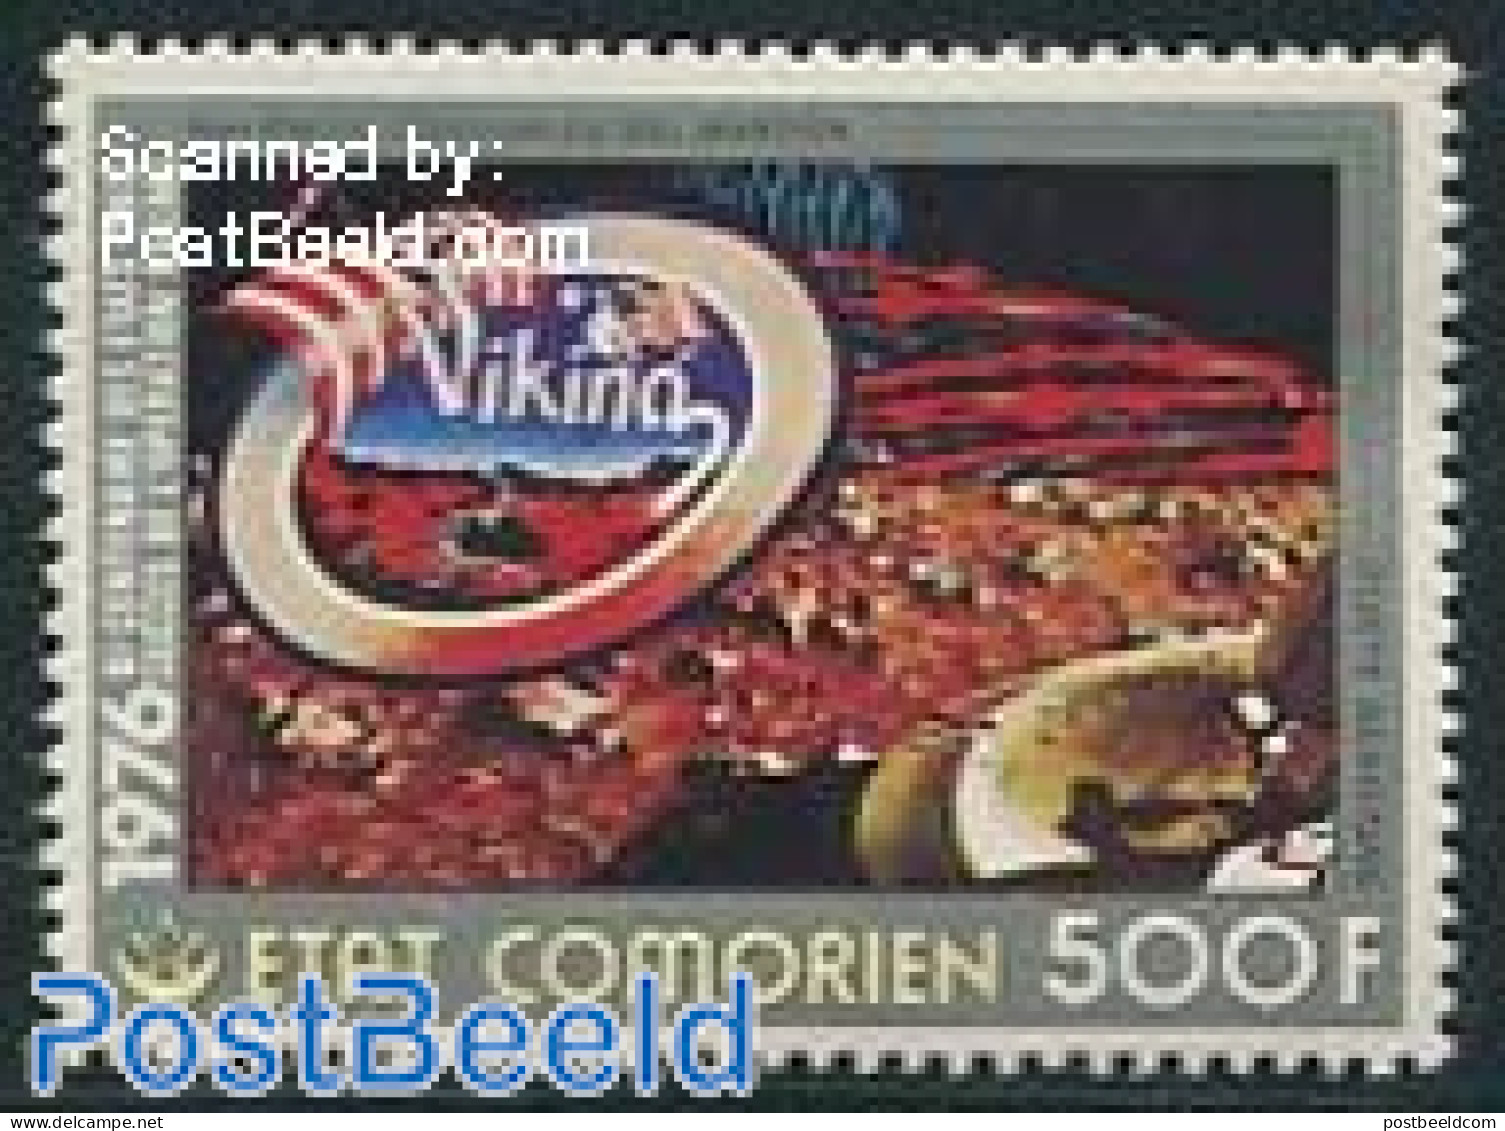 Comoros 1976 500F, Stamp Out Of Set, Mint NH, Transport - Space Exploration - Komoren (1975-...)